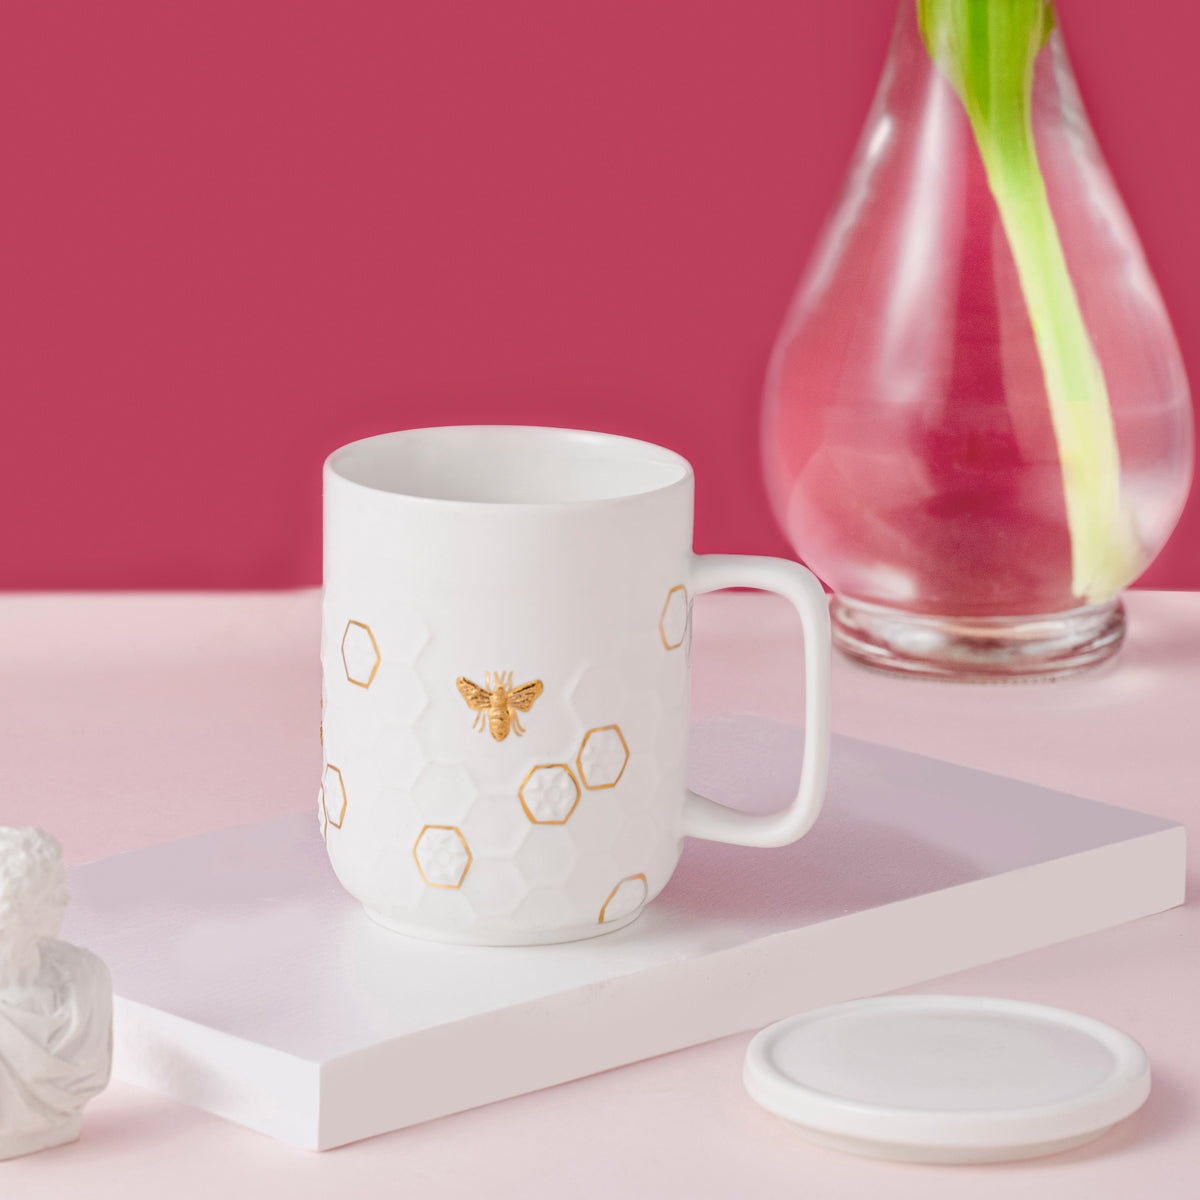 Flower of Life 3-in-1 Tea Mug with Infuser – ACERA LIVEN